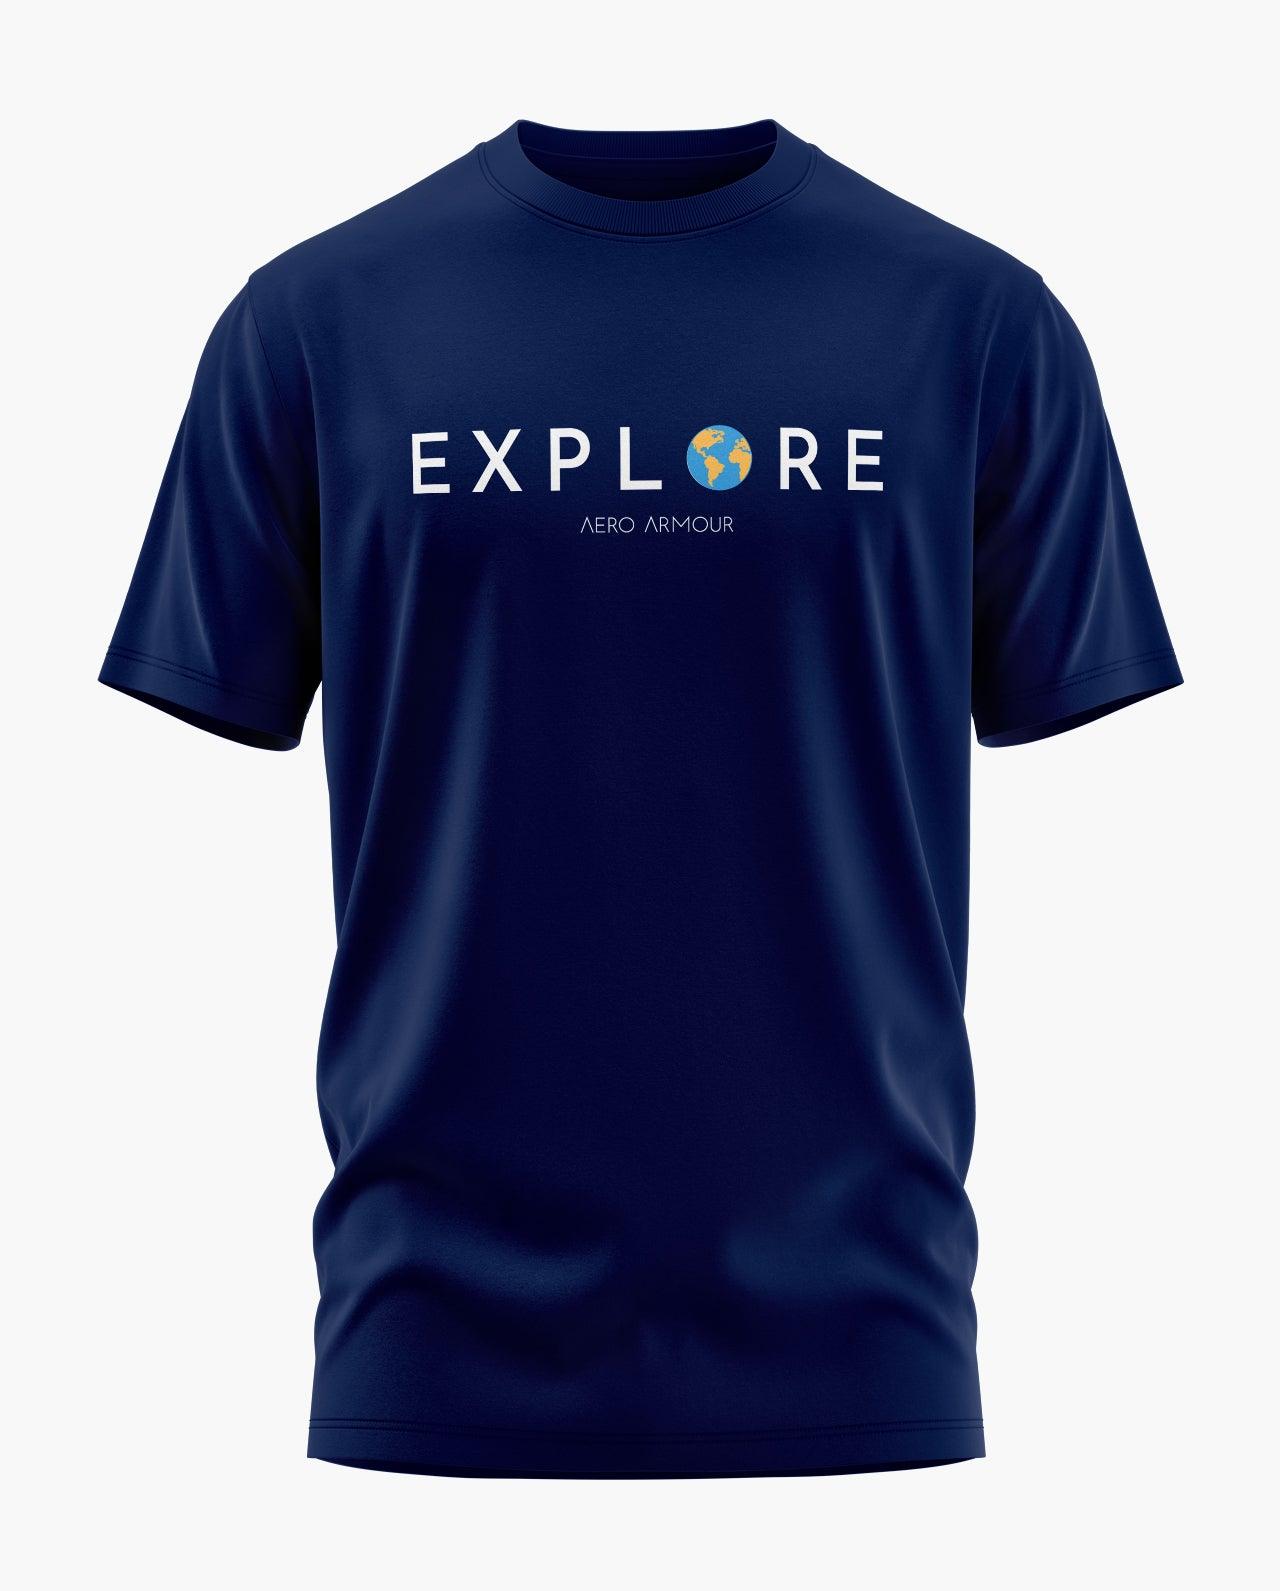 Explore T-Shirt - Aero Armour